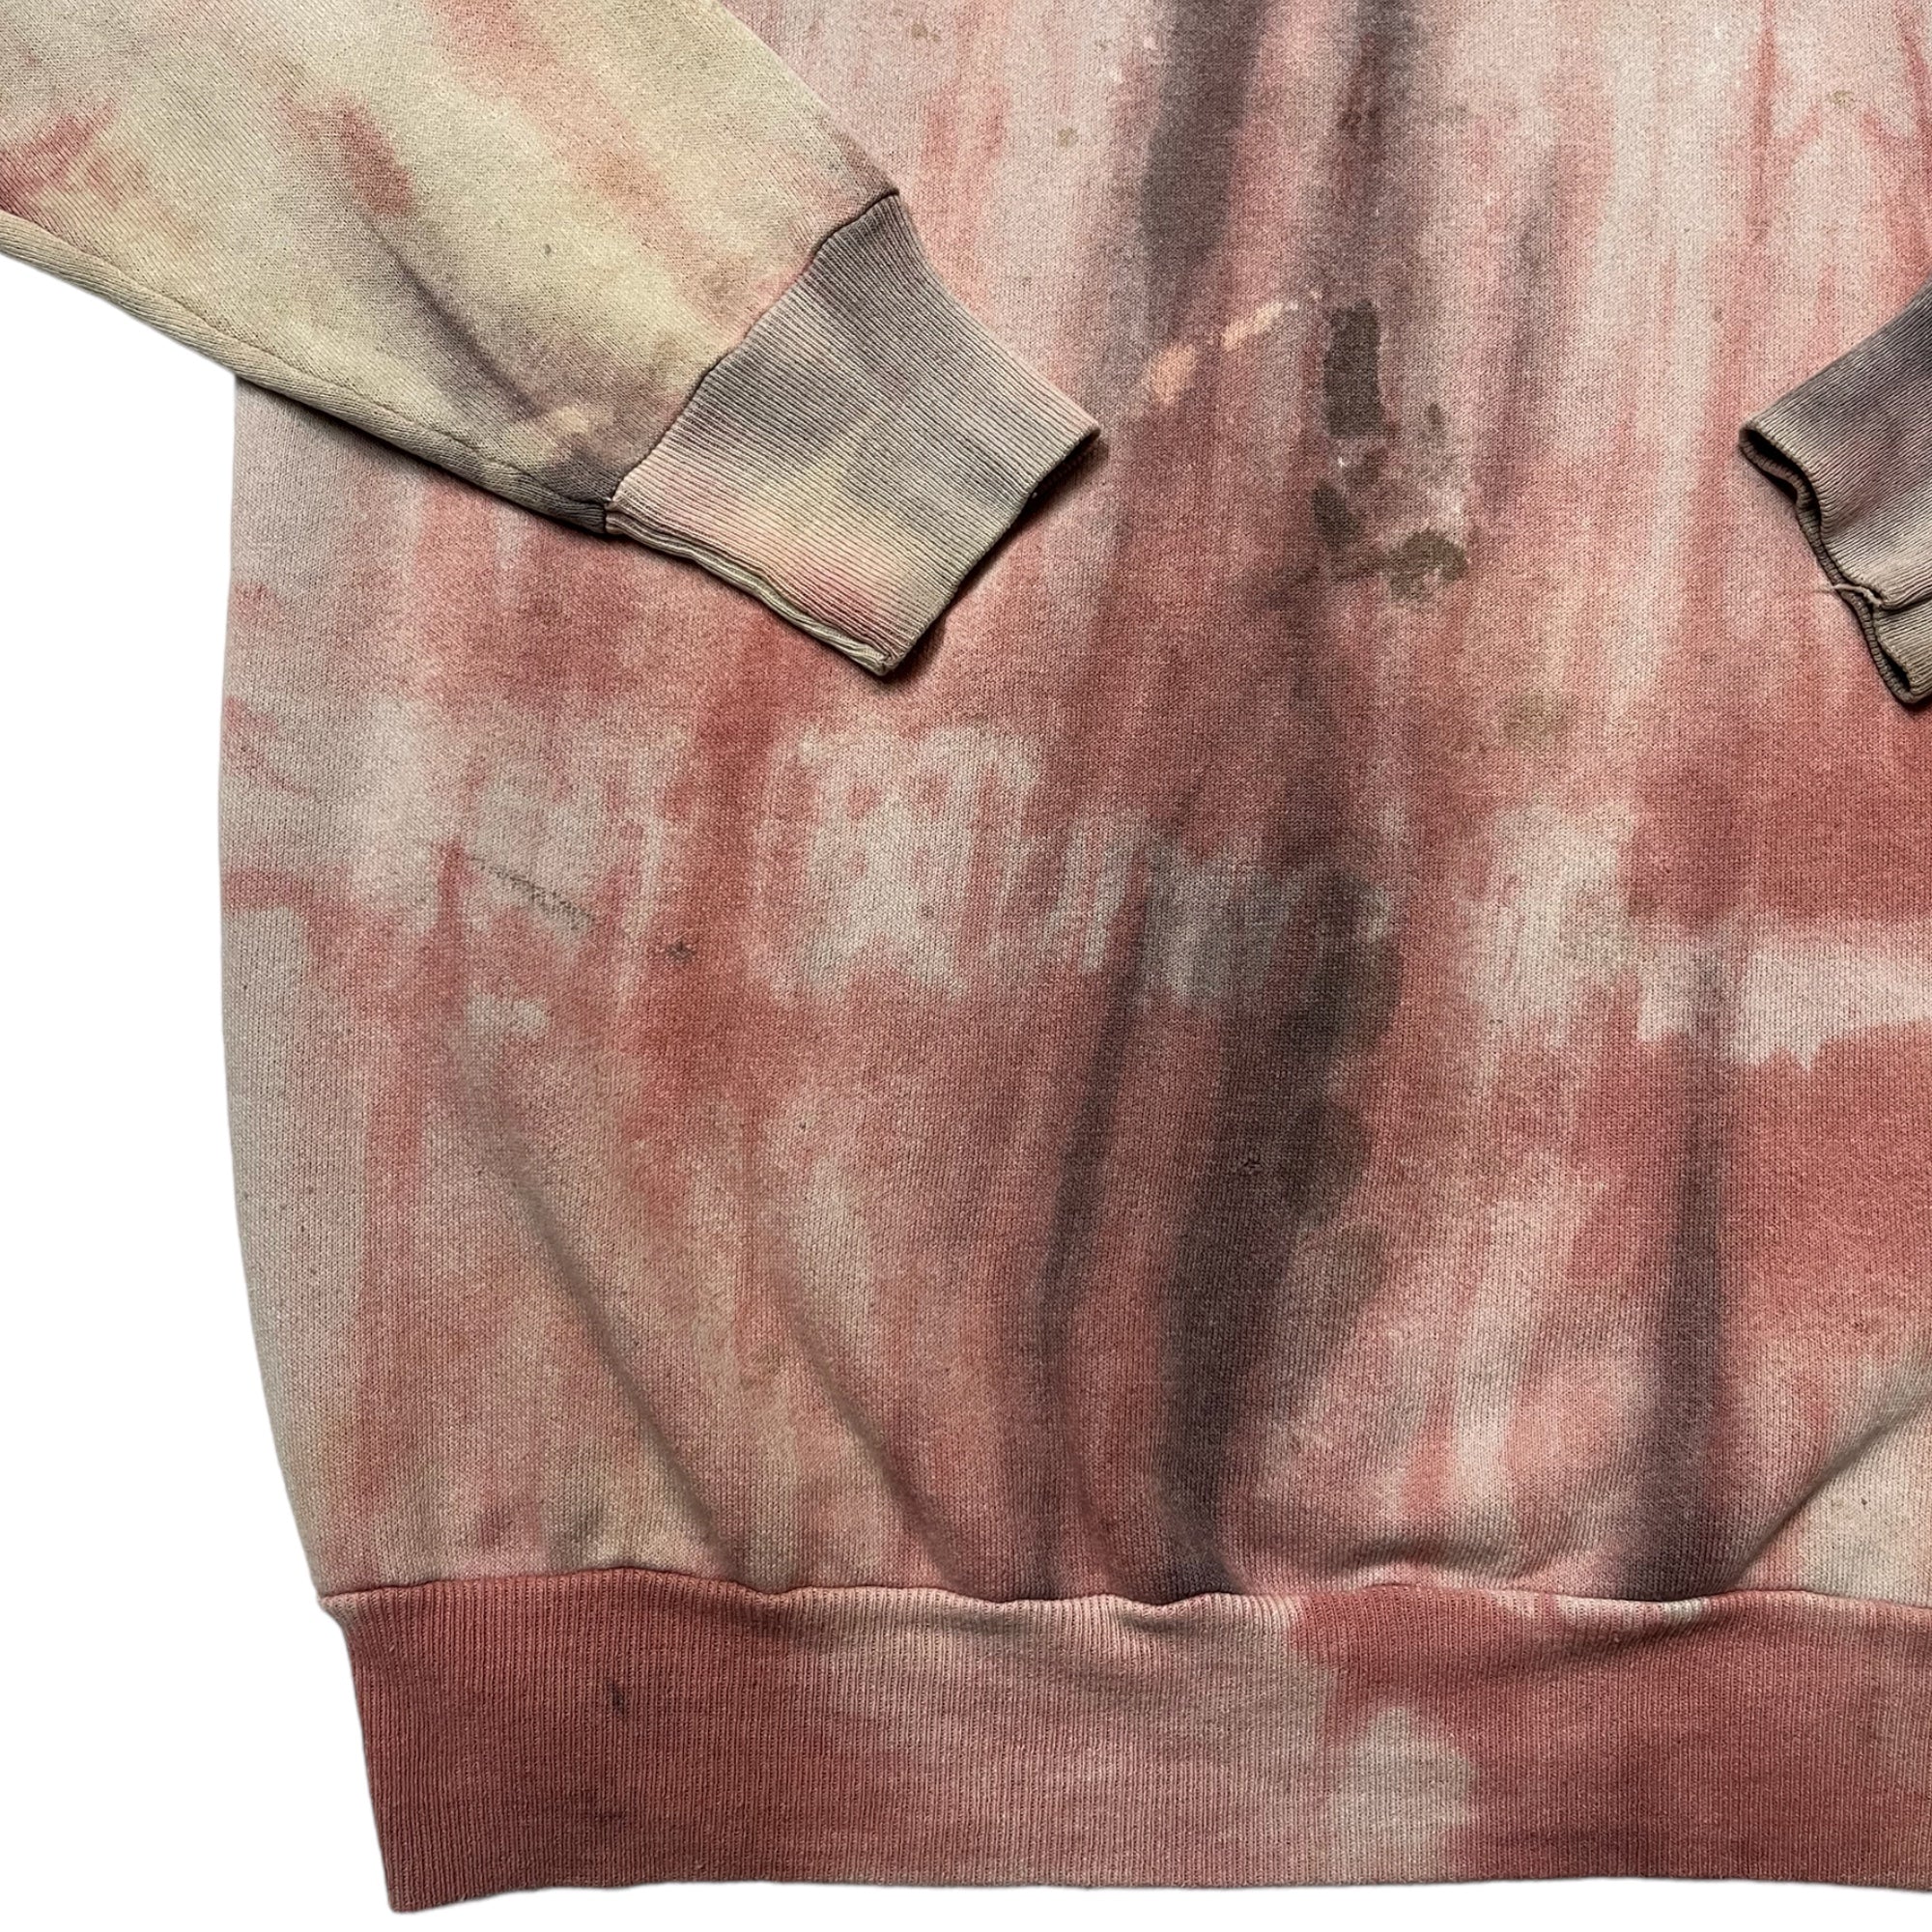 1980s Distressed Tie-Dye Raglan Sweatshirt - Pink/Discolored - L/XL